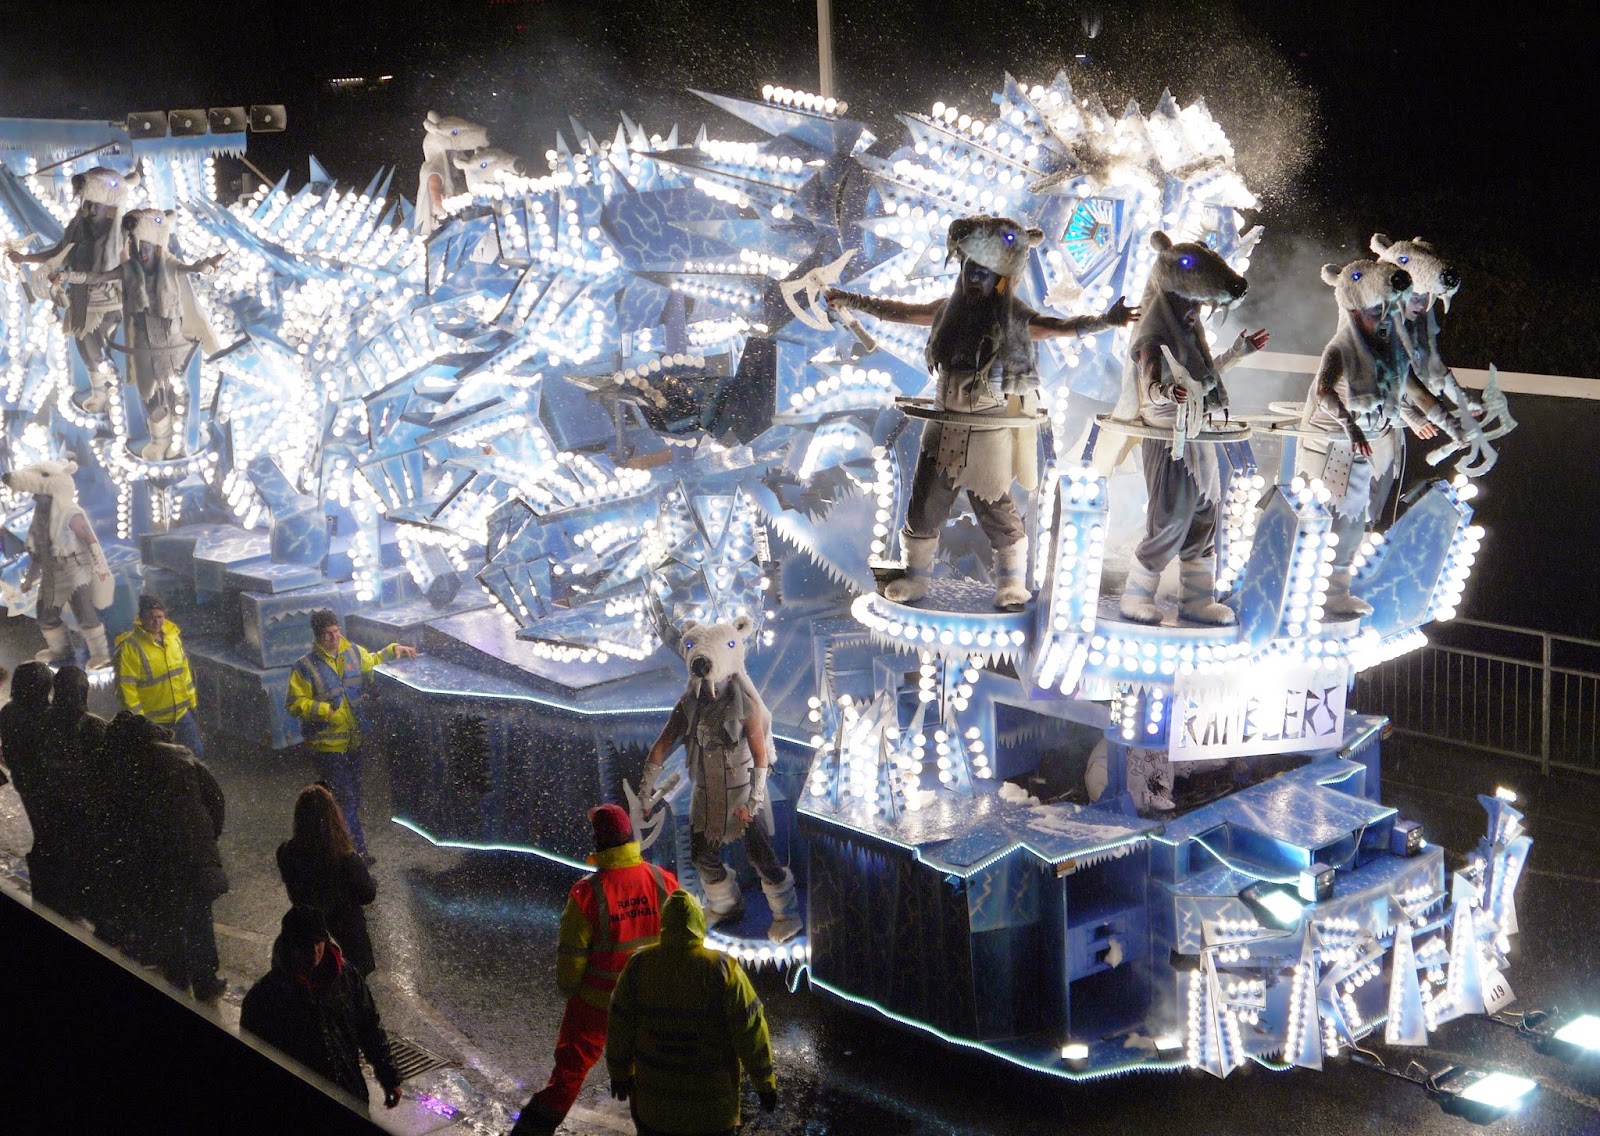 Somerset Carnival Season 2014 - Ramblers Carnival Club with 'Freeze'